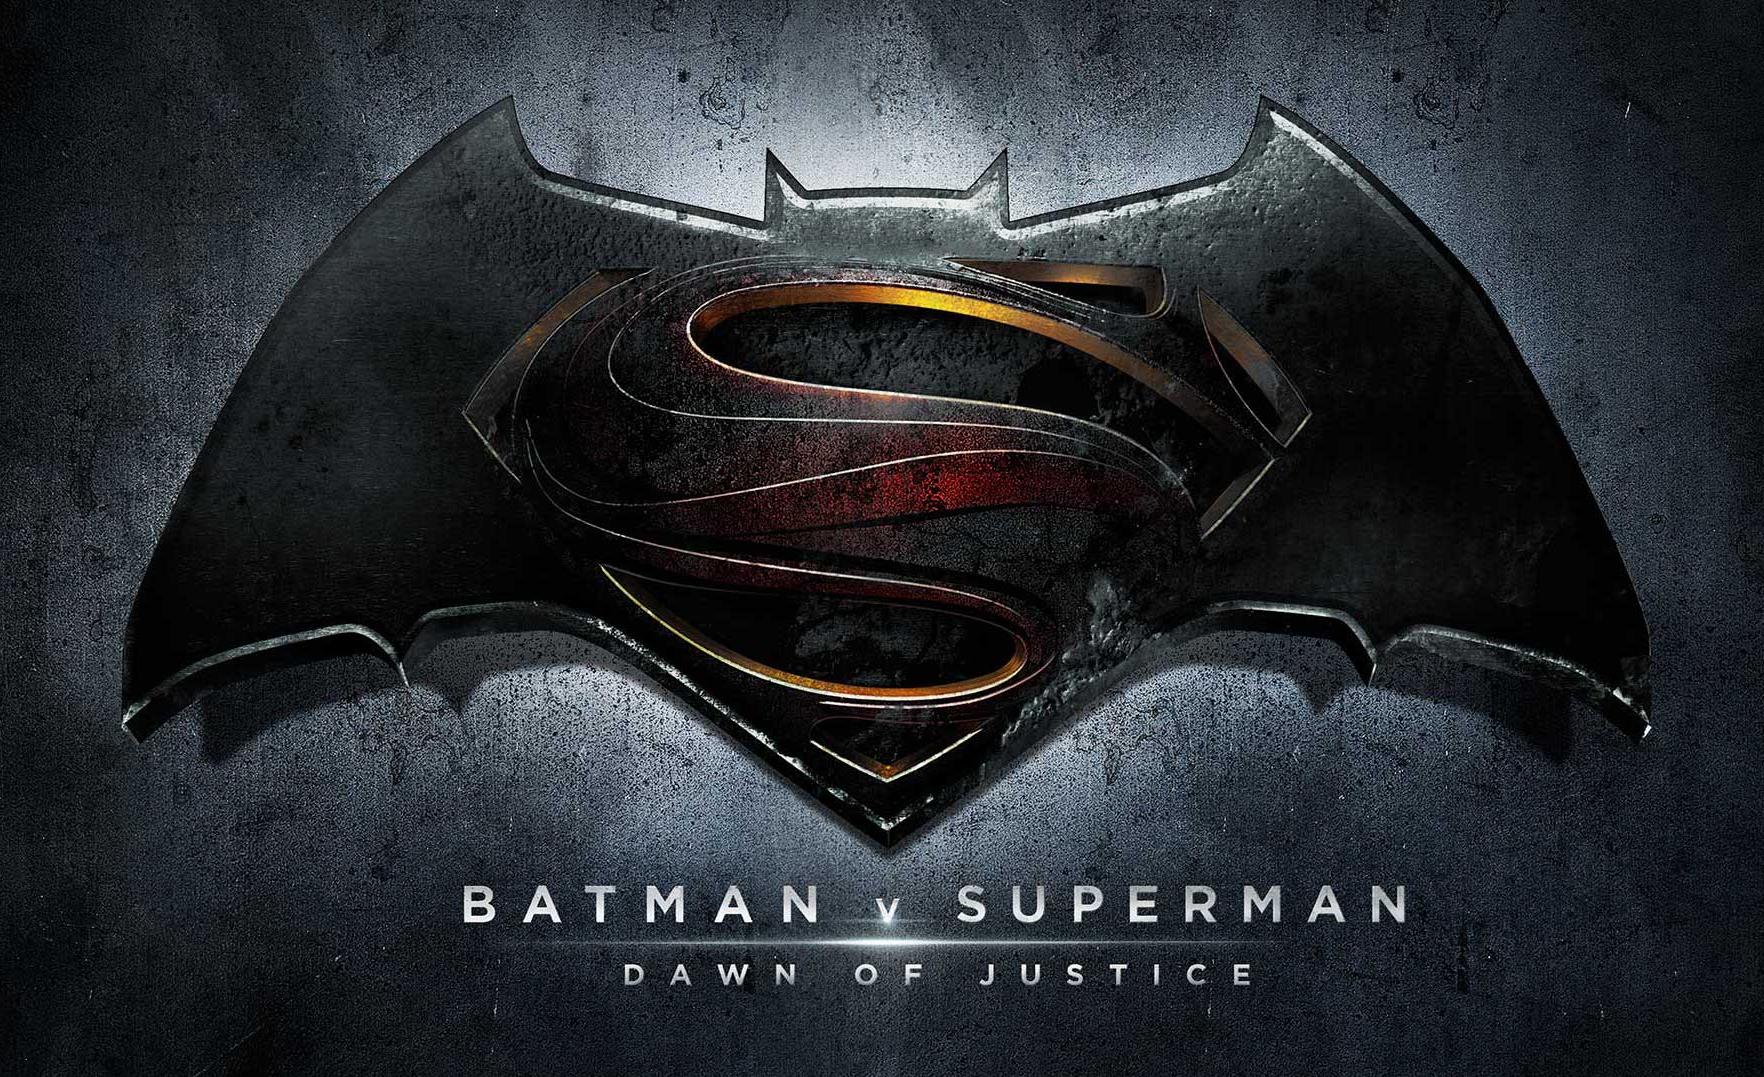 batman vs superman ultimate edition download free